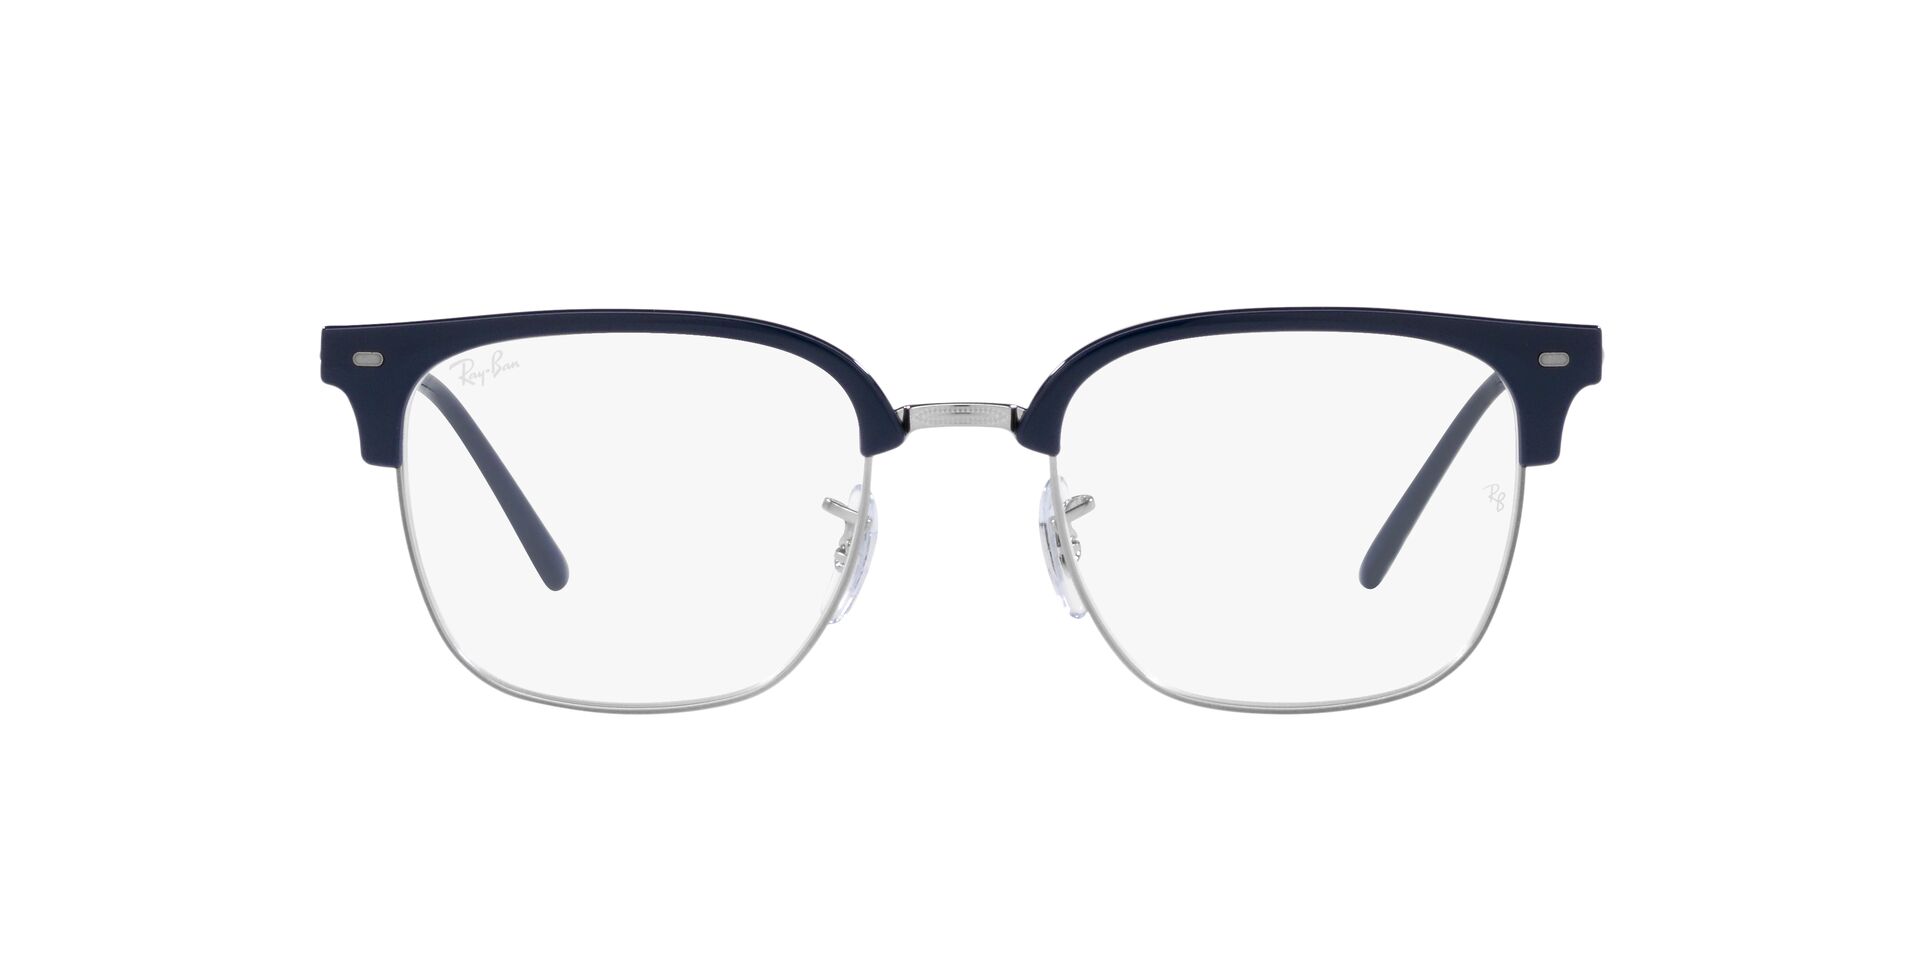 Ray Ban l 低奢質感眉框眼鏡 智慧藍(53mm)